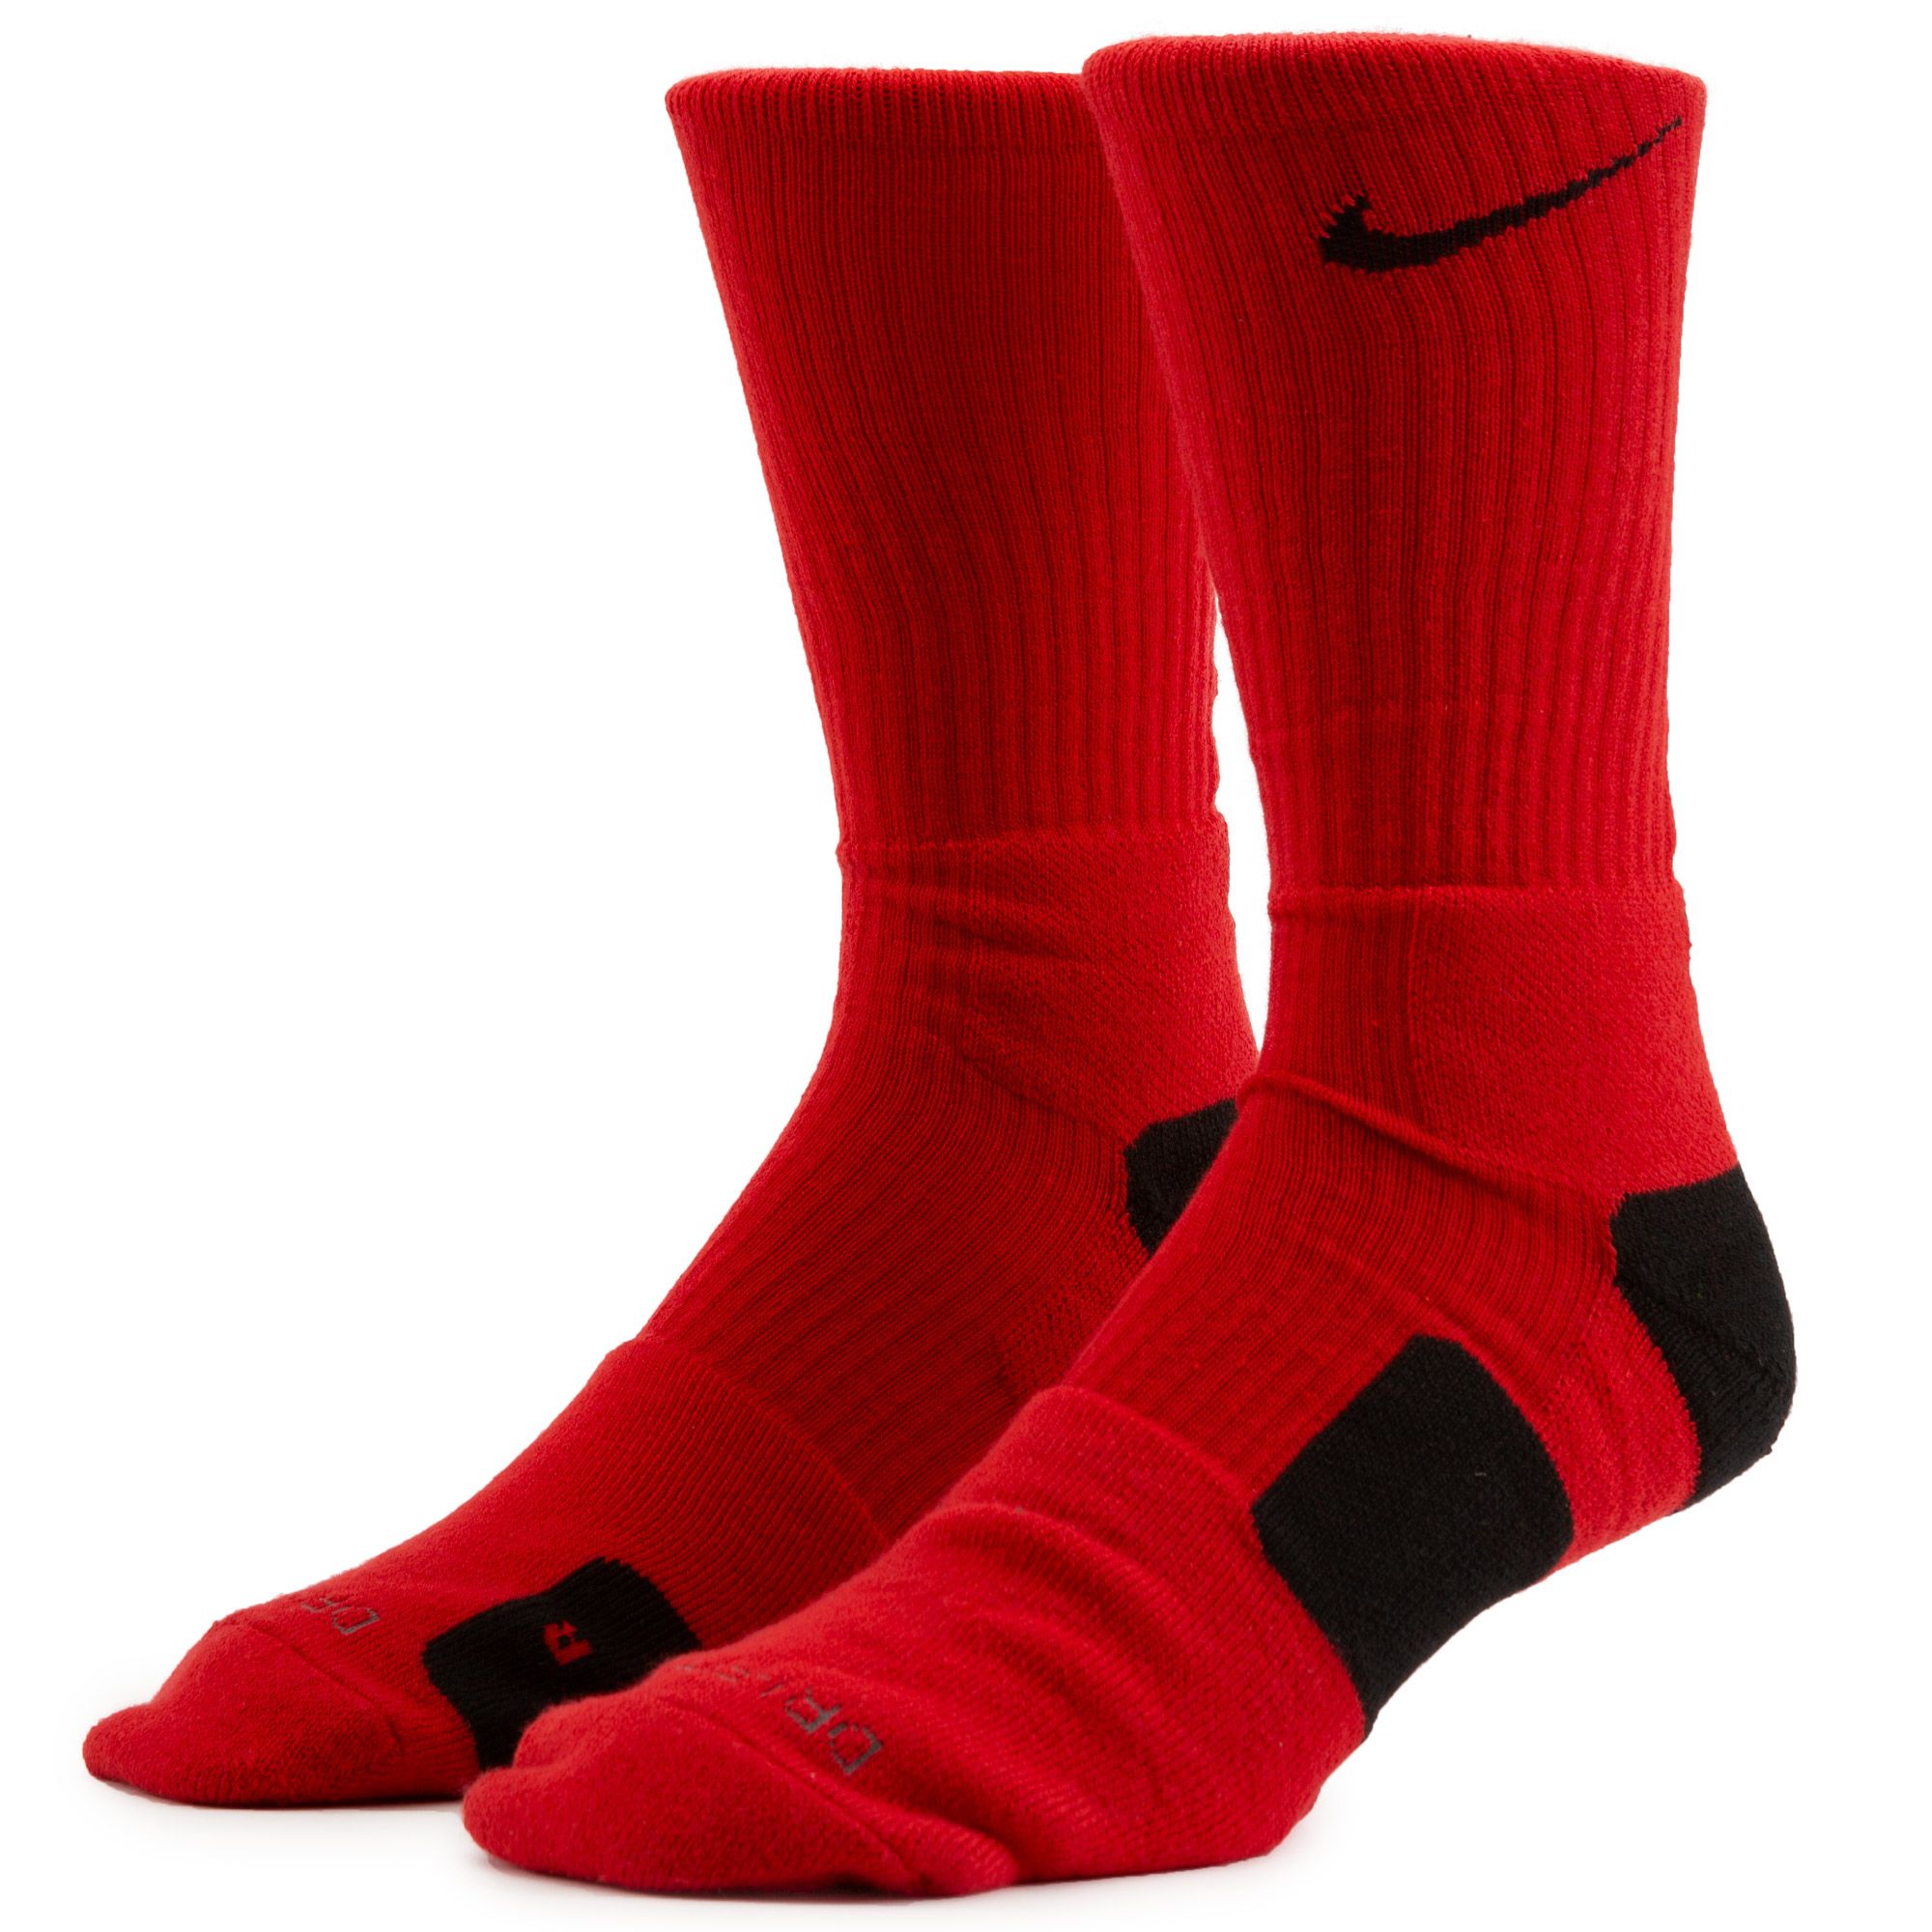 Men's Elite Socks